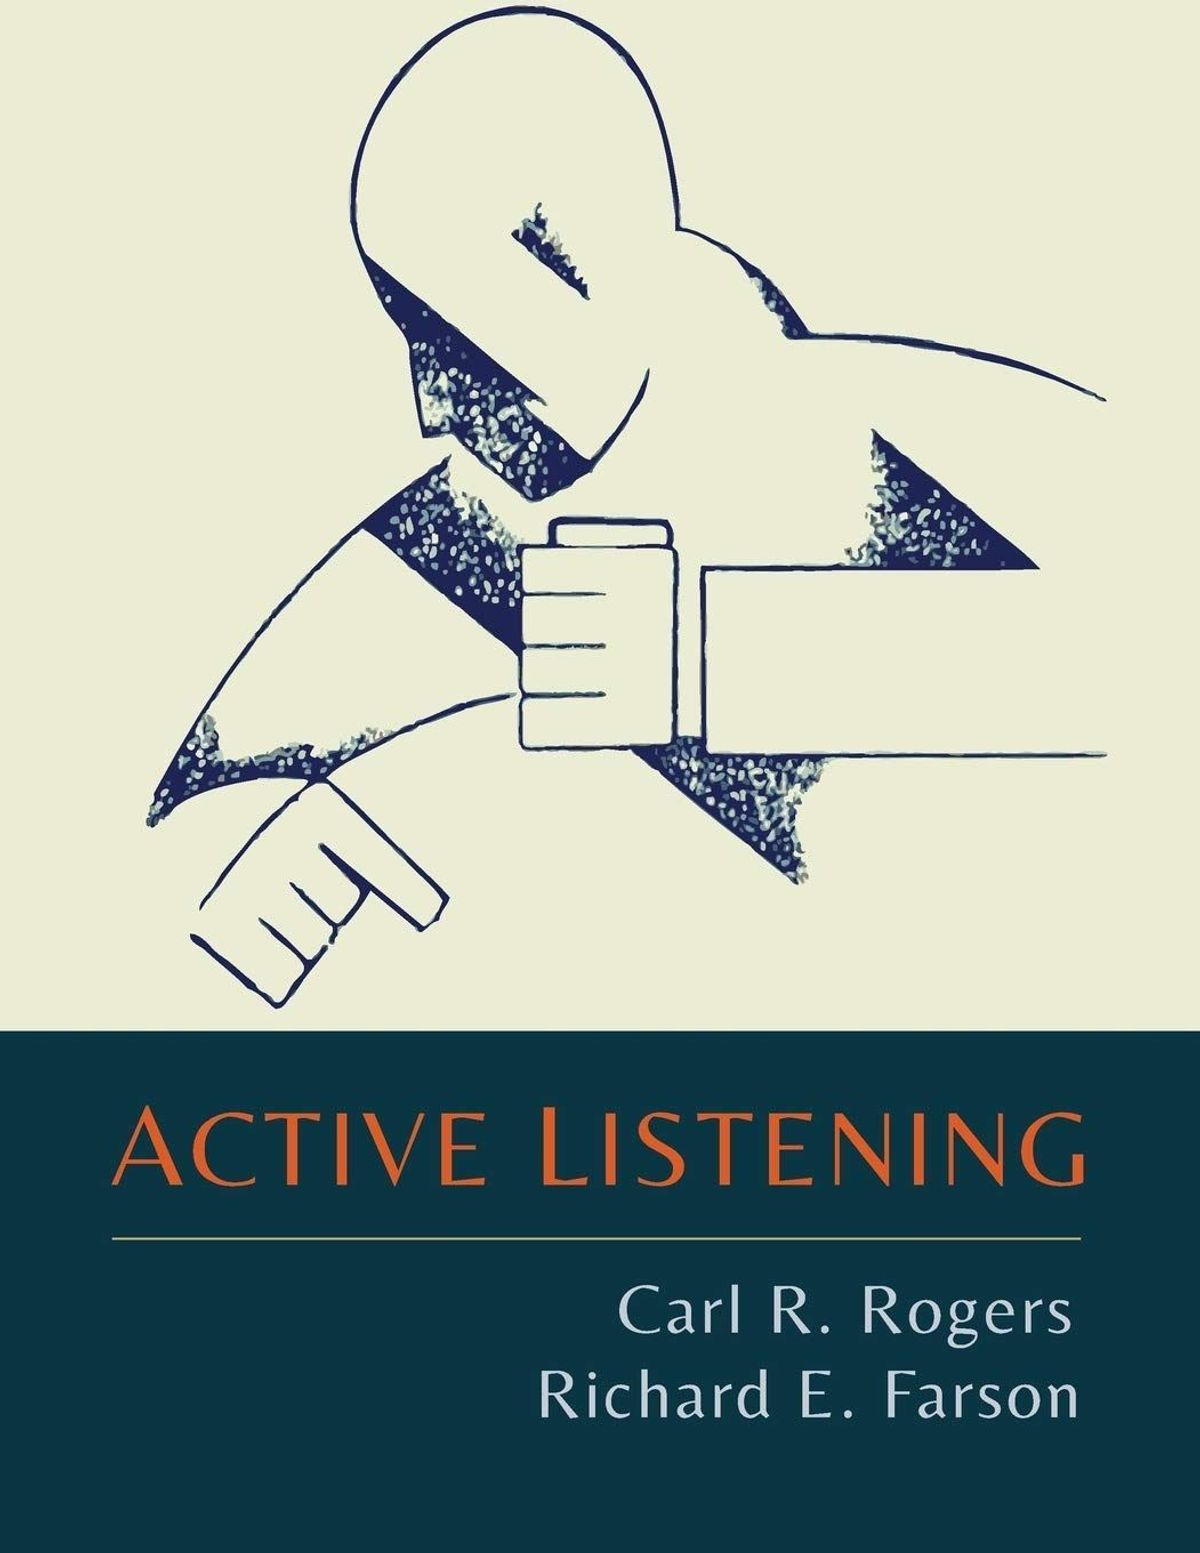 Book cover: Active Listening by Carl E. Rogers & Richard E. Farson